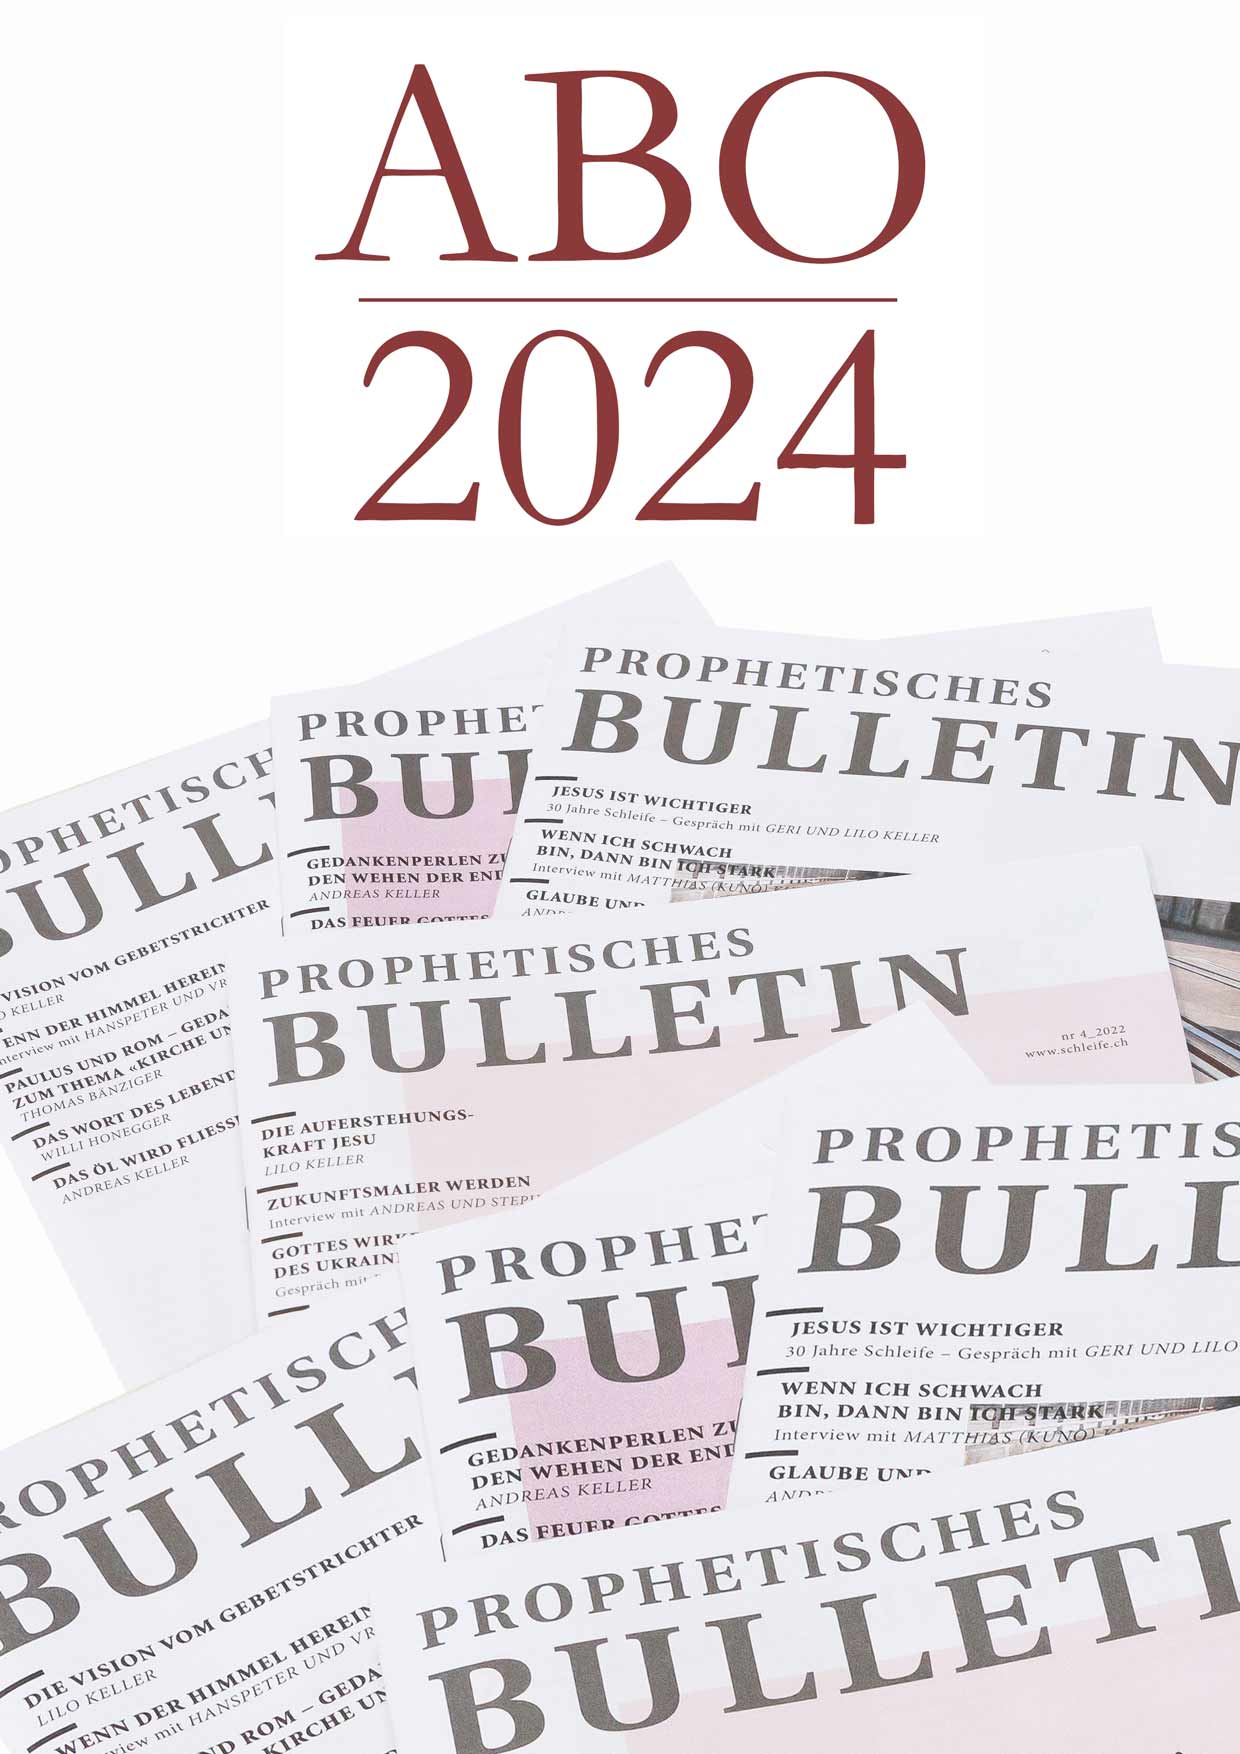 Abo Prophetisches Bulletin 2024